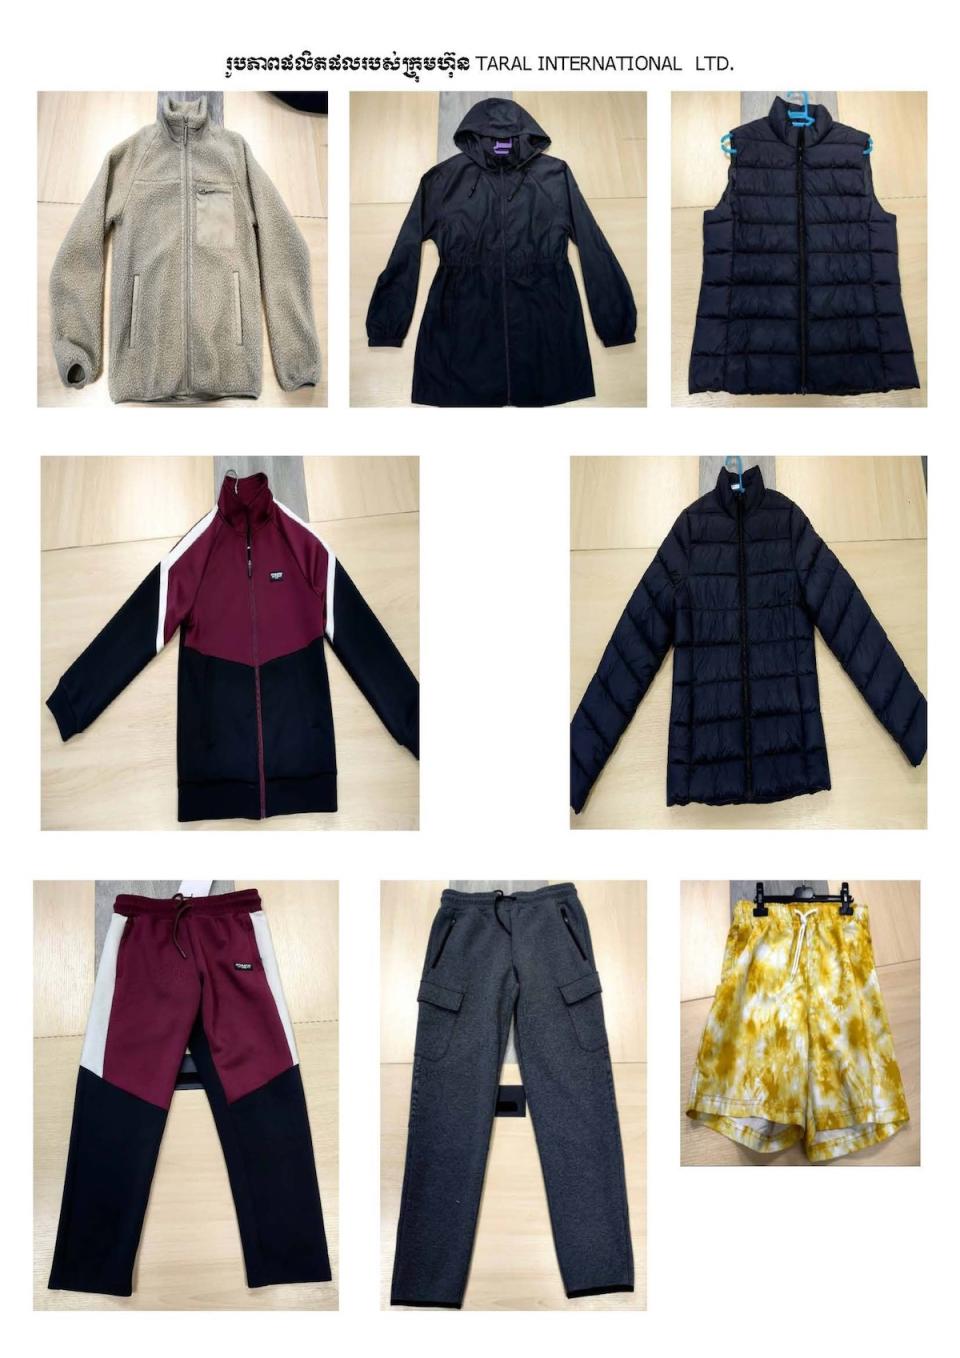 Garments from Taral International.